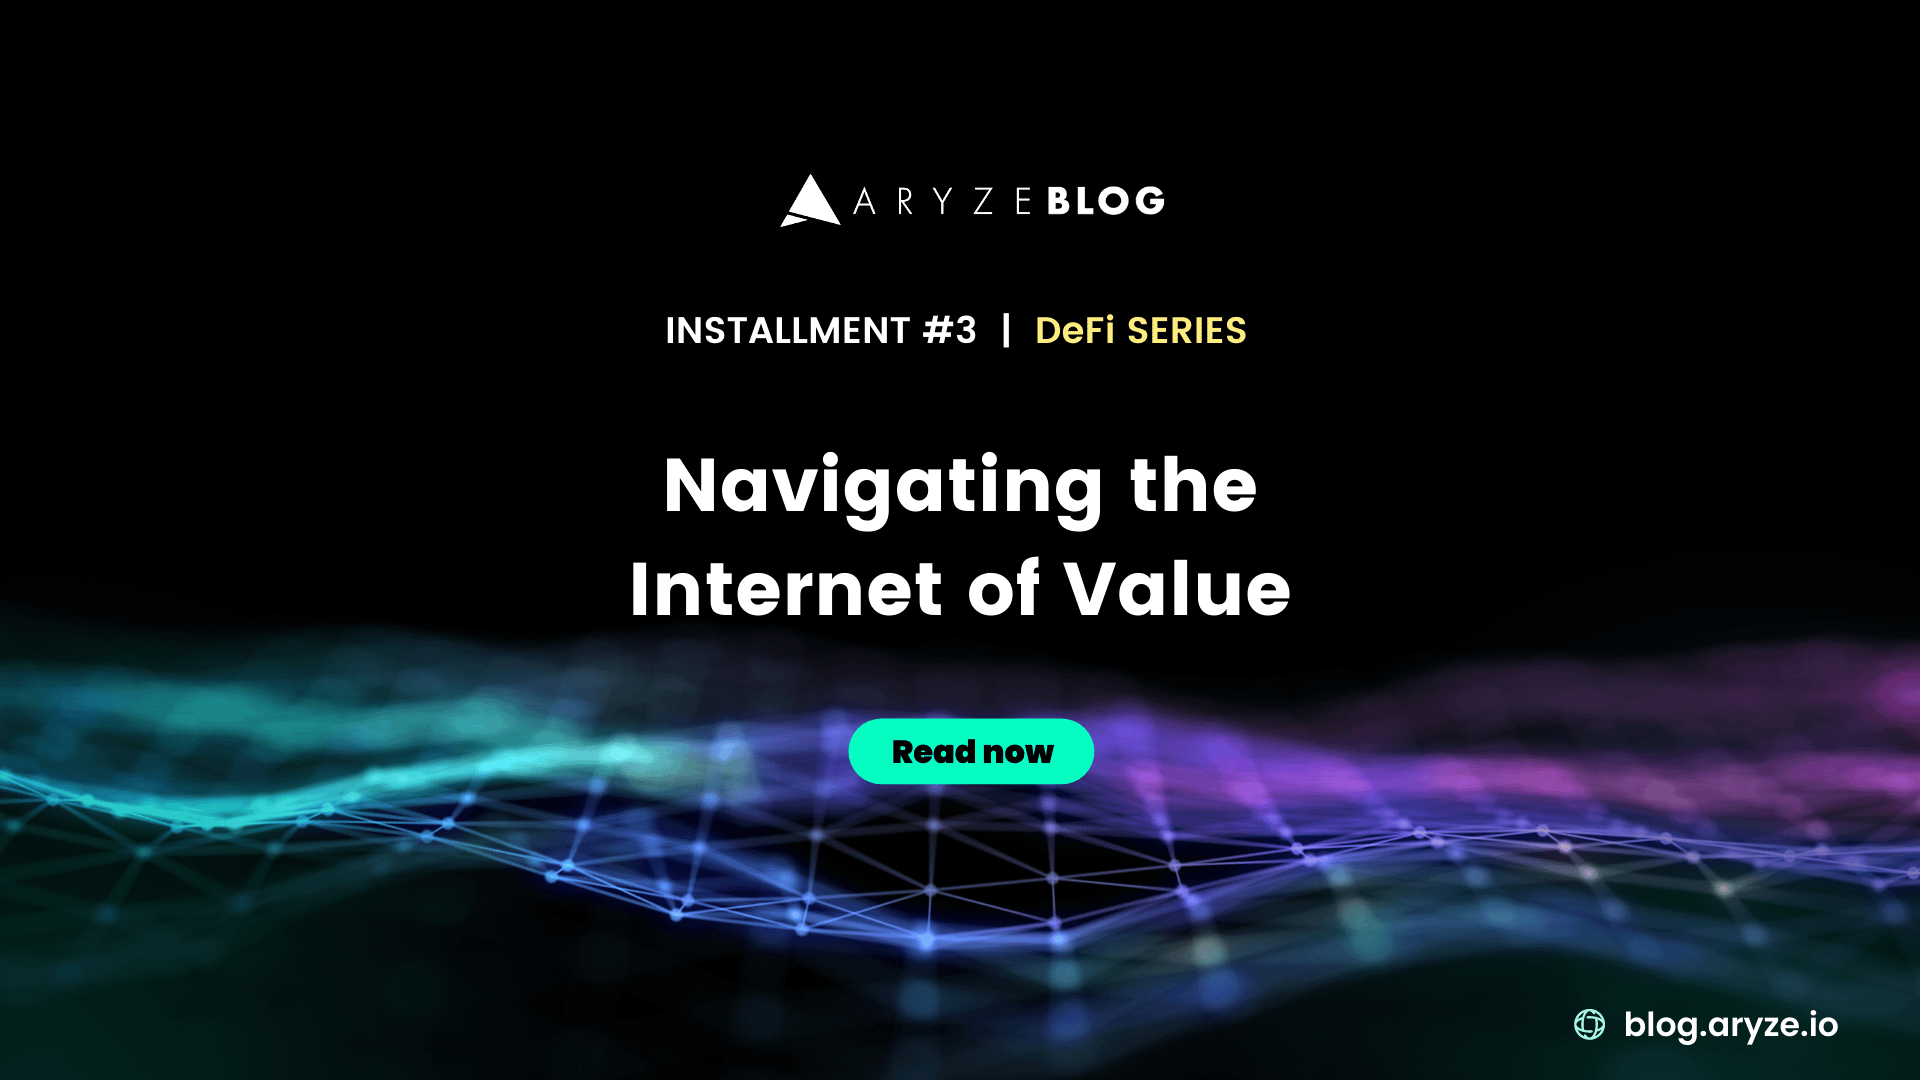 ARYZE Blog | Navigating the Internet of Value (DeFi Series #3)